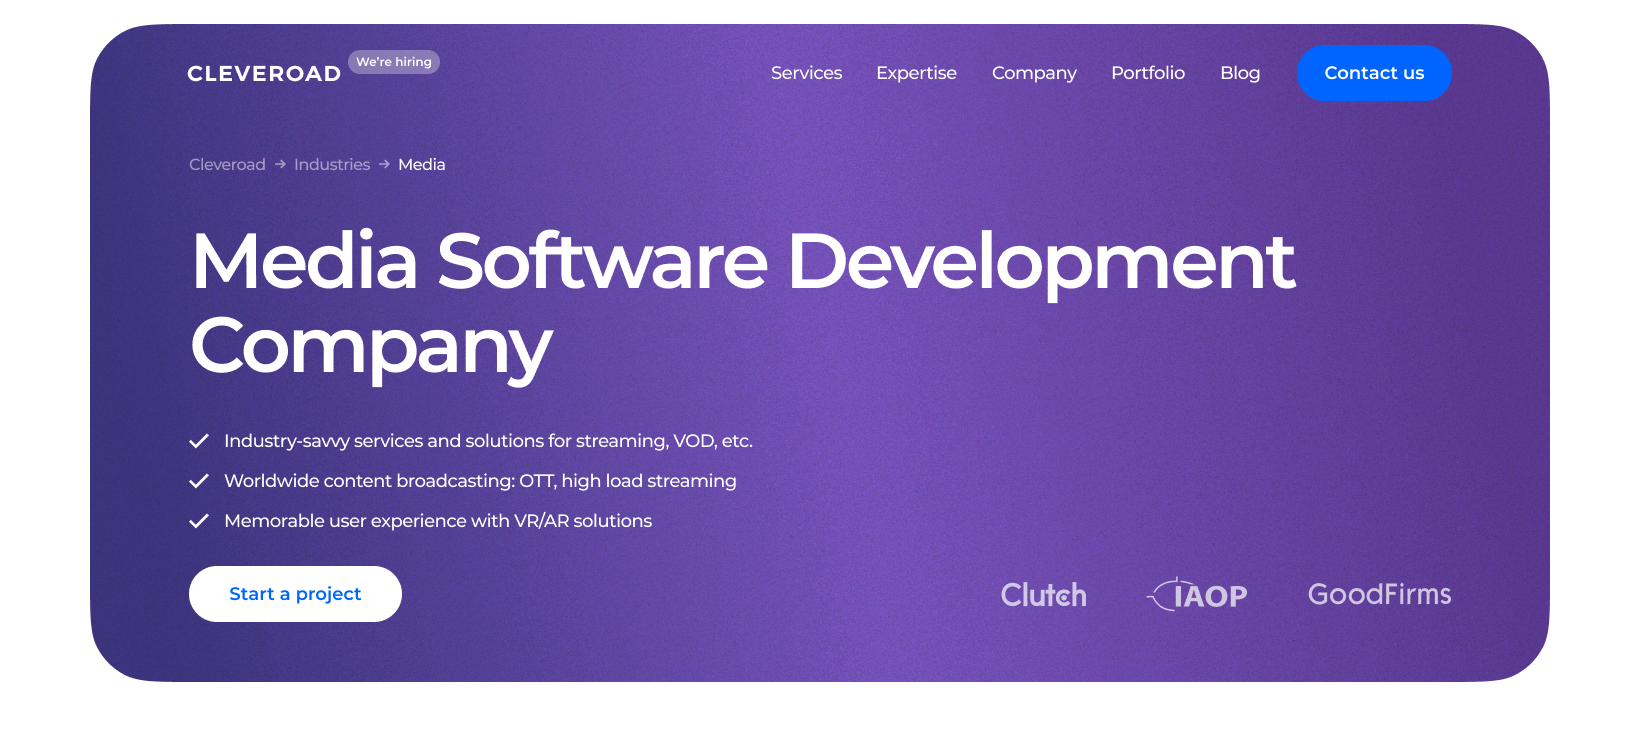 Entertainment and Media Software Development Company